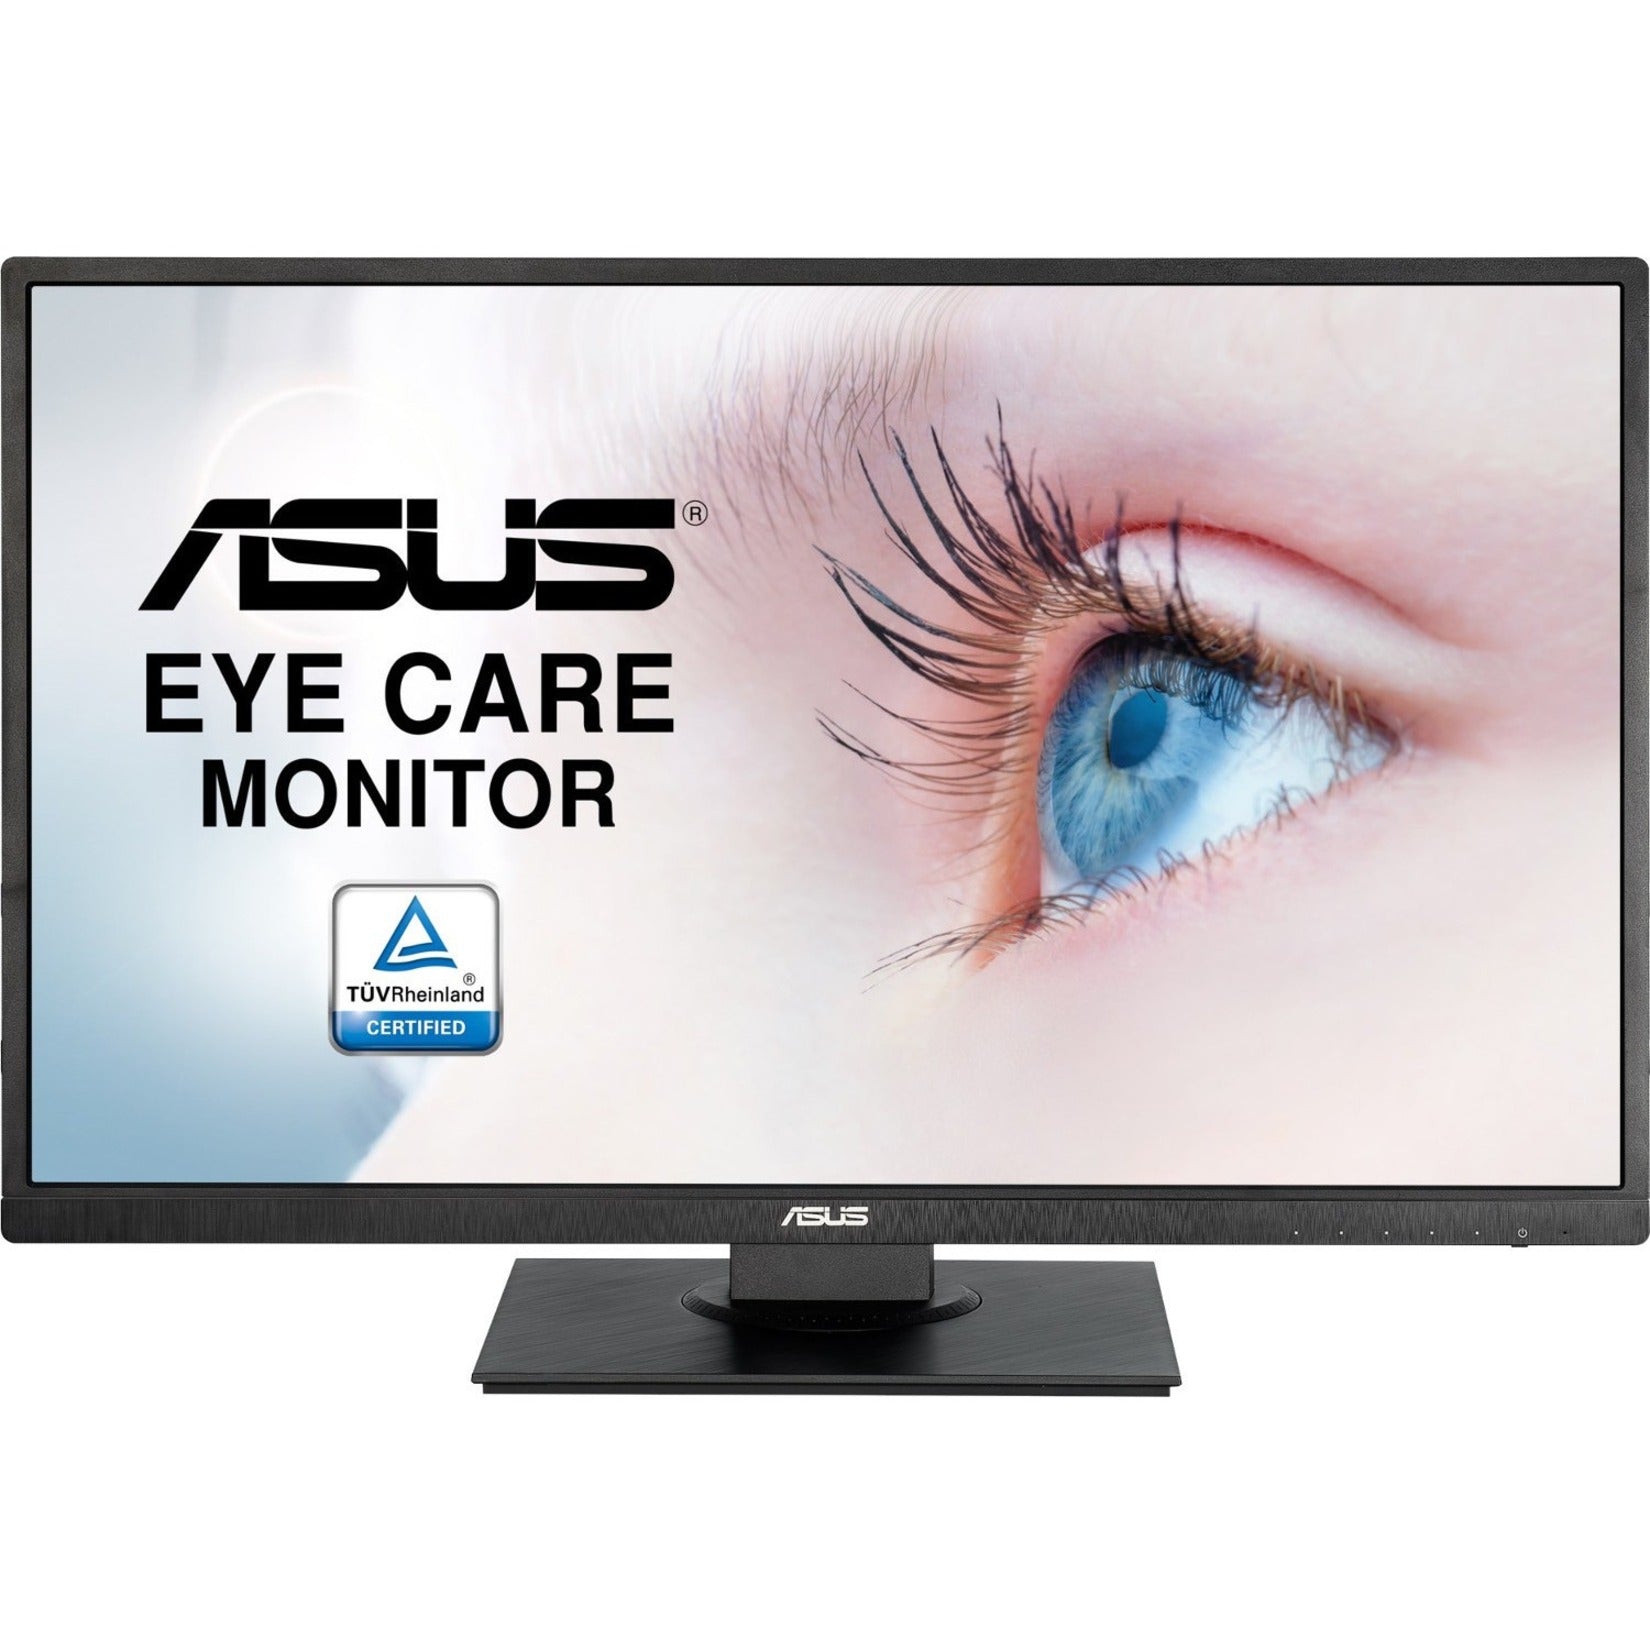 Asus VA279HAL Widescreen LCD Monitor, 27 Full HD, 300 Nit Brightness, 16:9 Aspect Ratio, Black